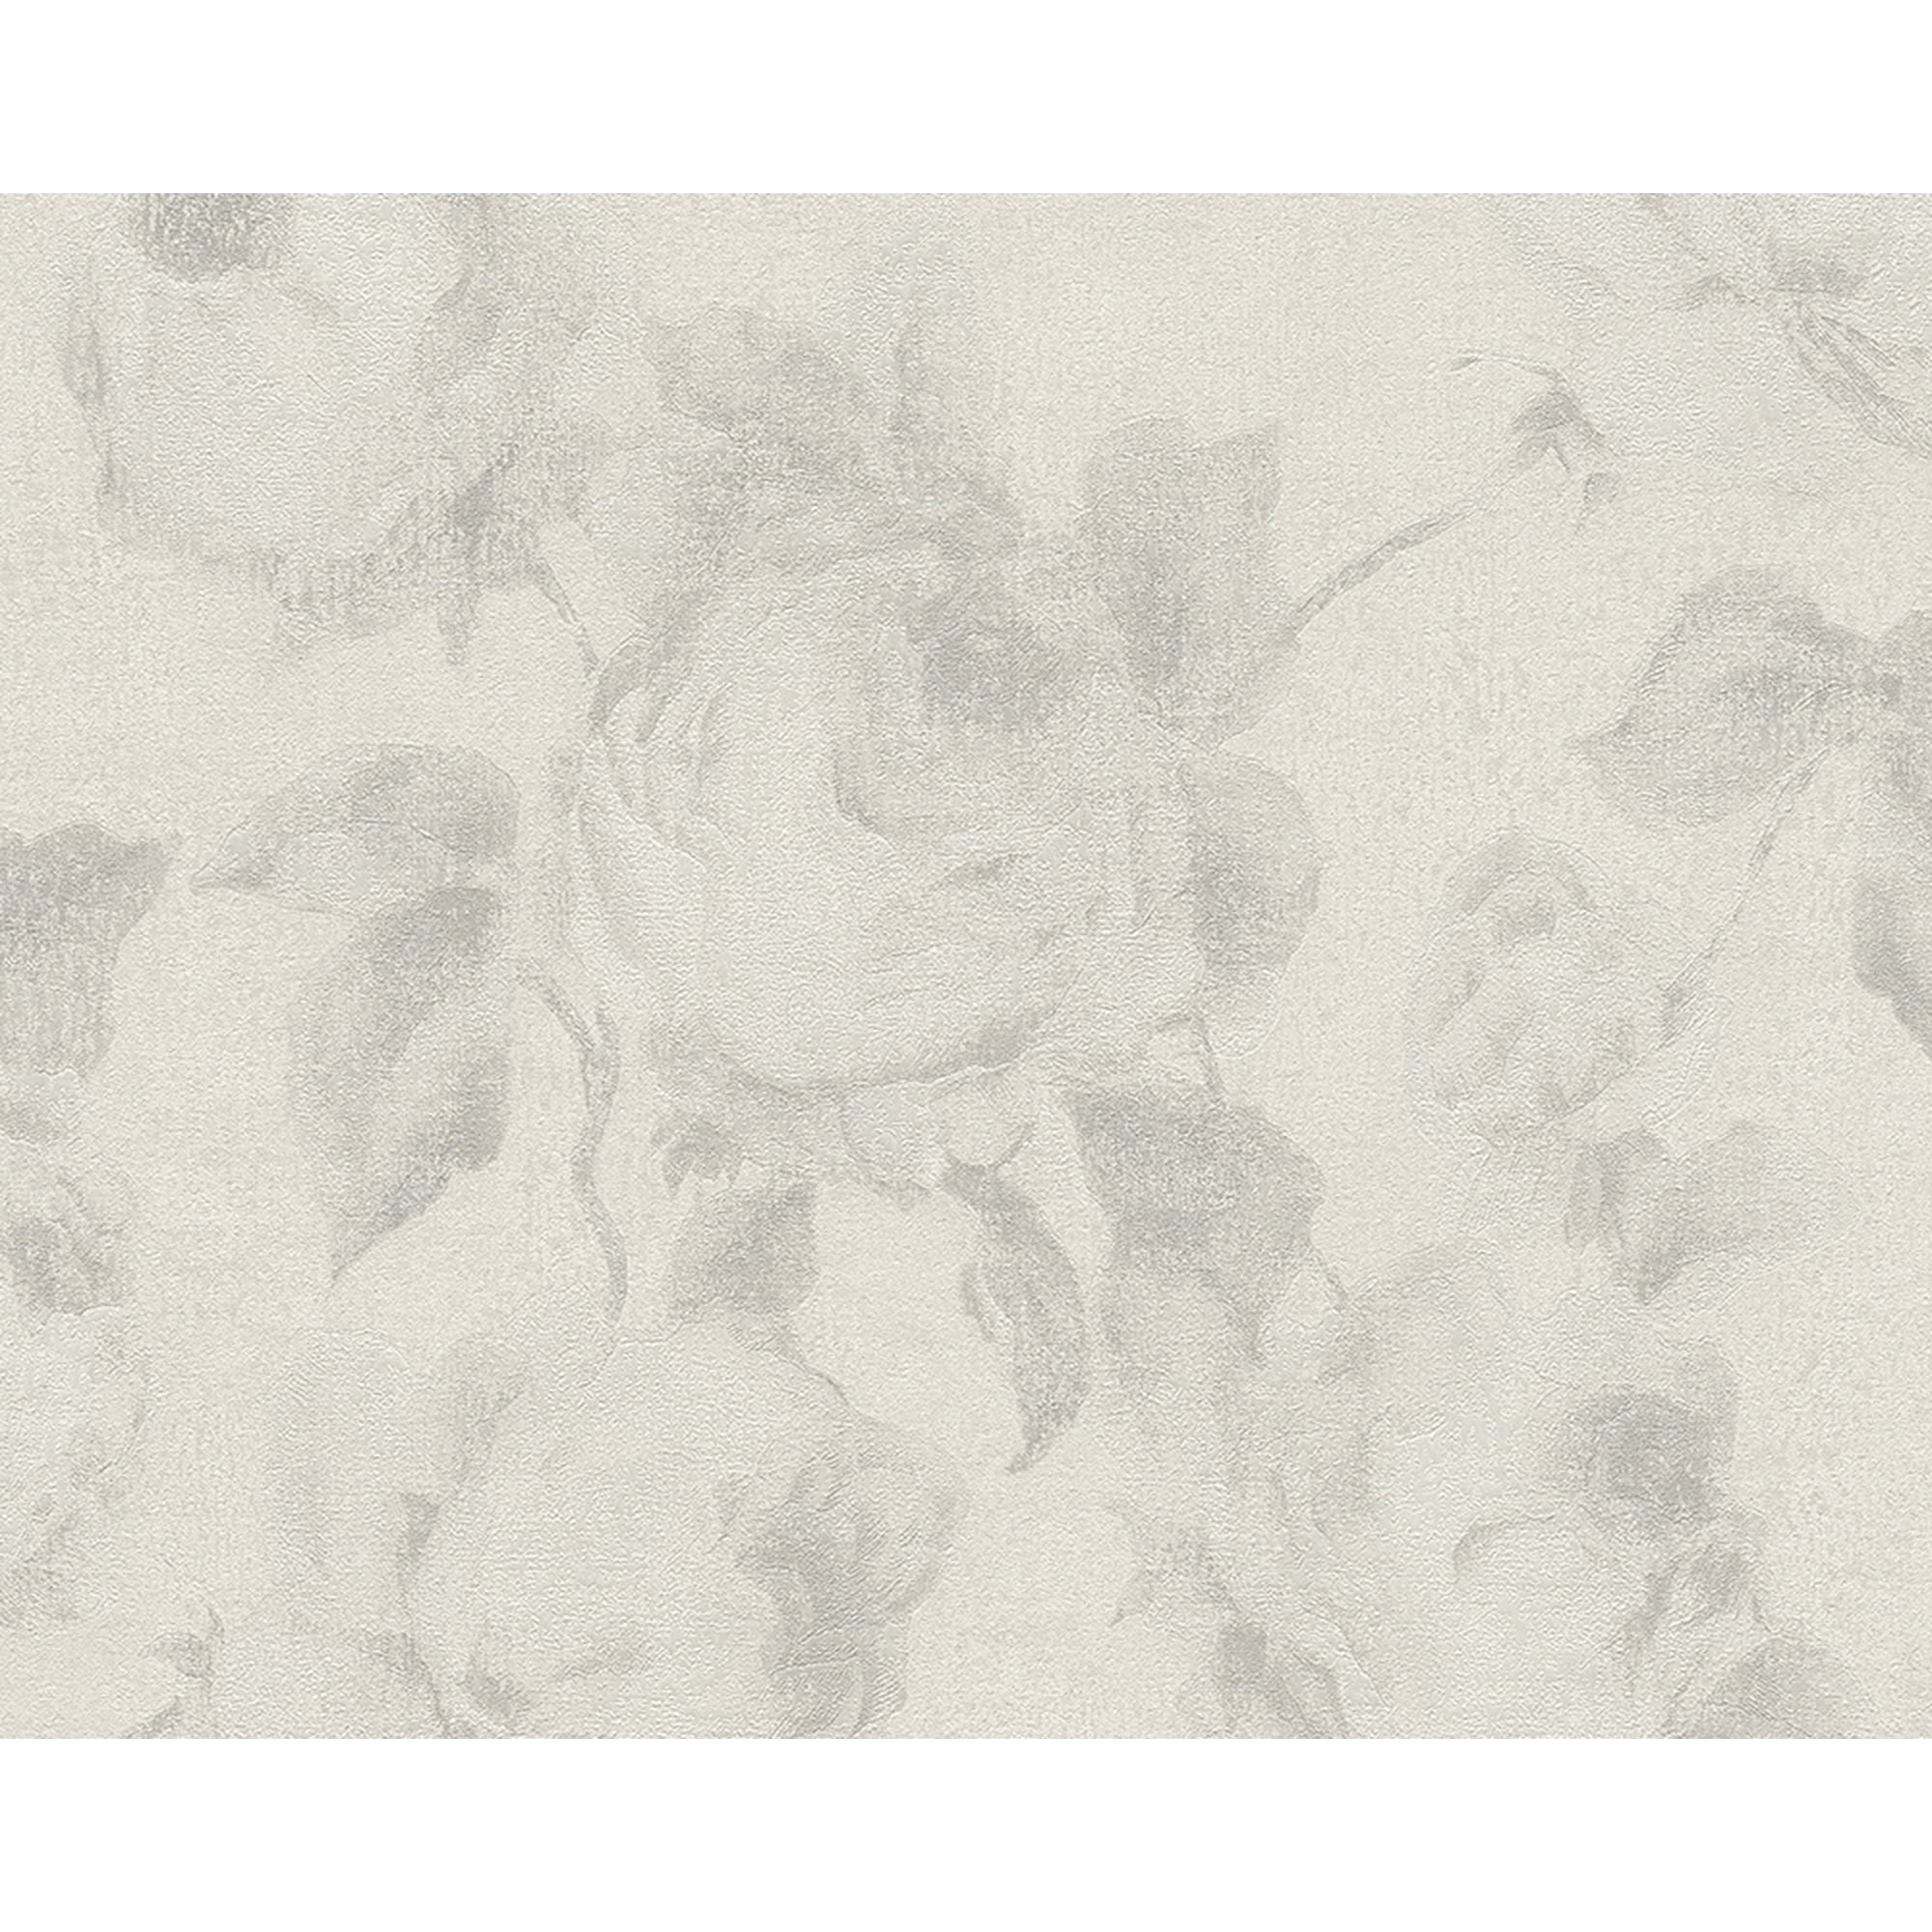 Bohemian Burlesque Textured Classic Romantic Stylish White Wallpaper Roll